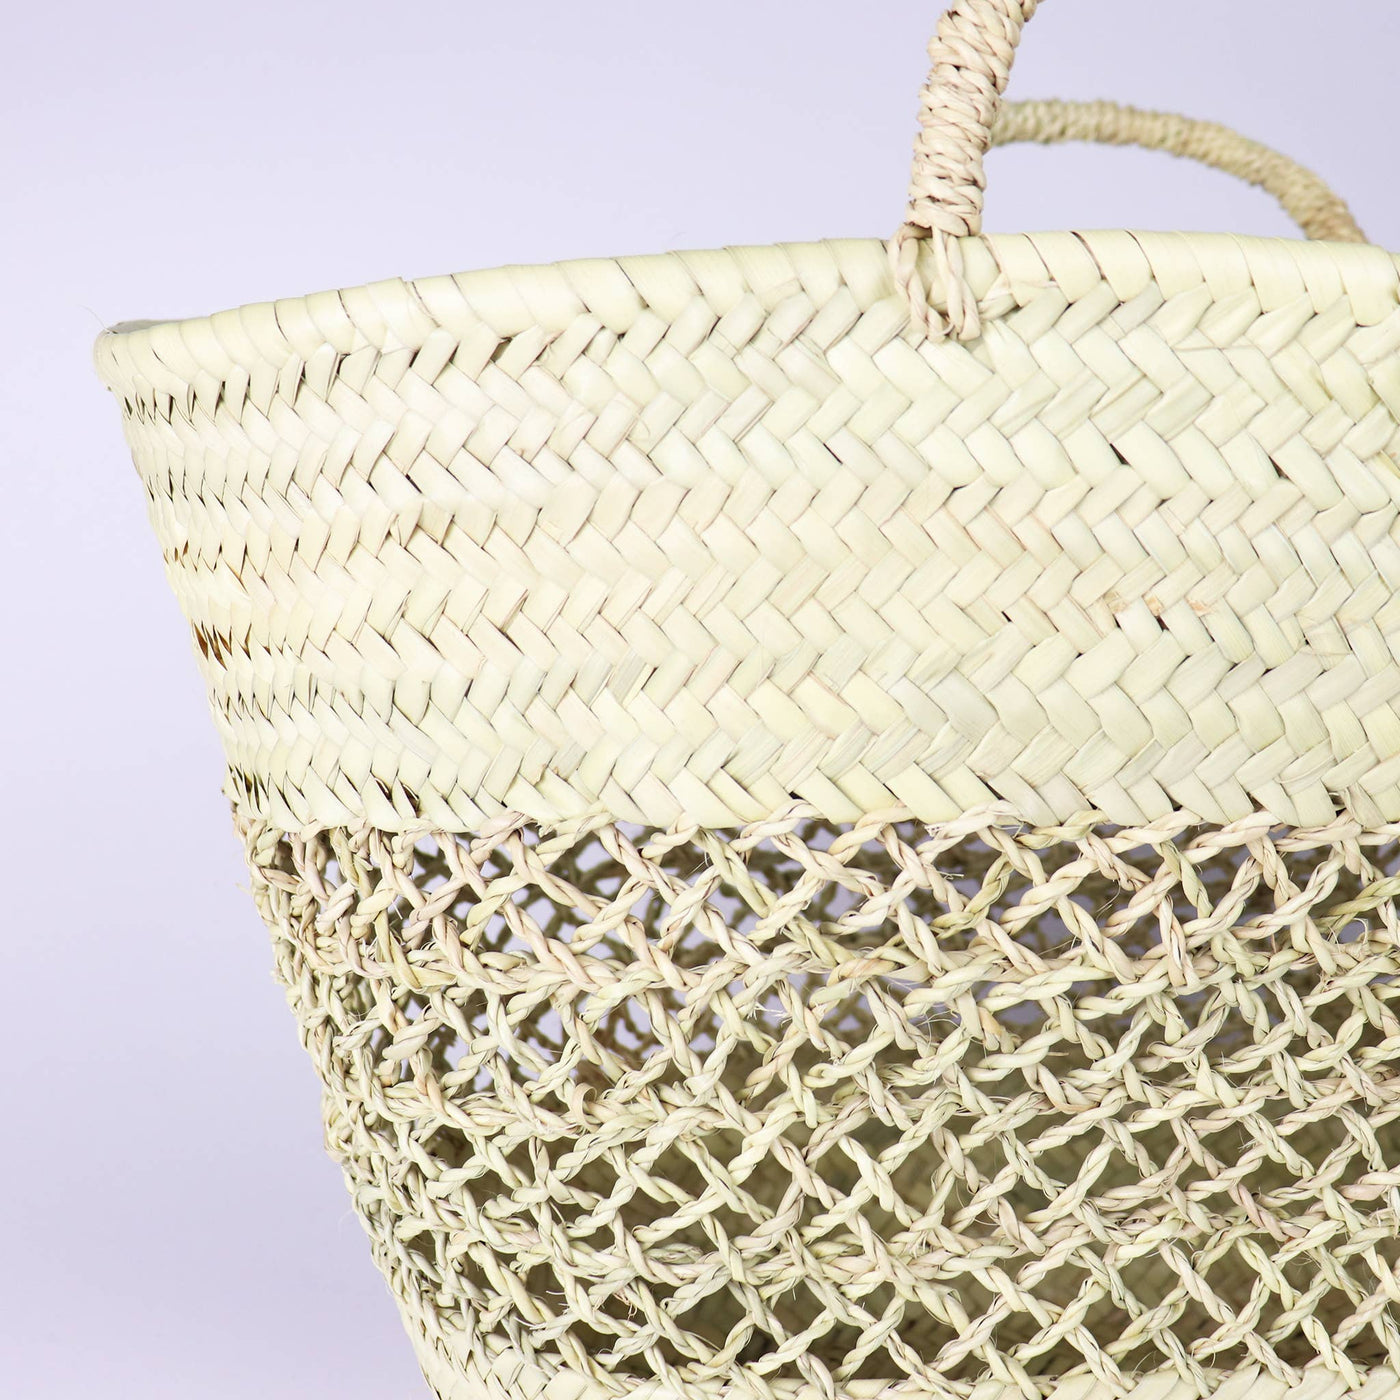 SOCCO Designs Lagos French Basket - Straw Beach Tote - Simple Good